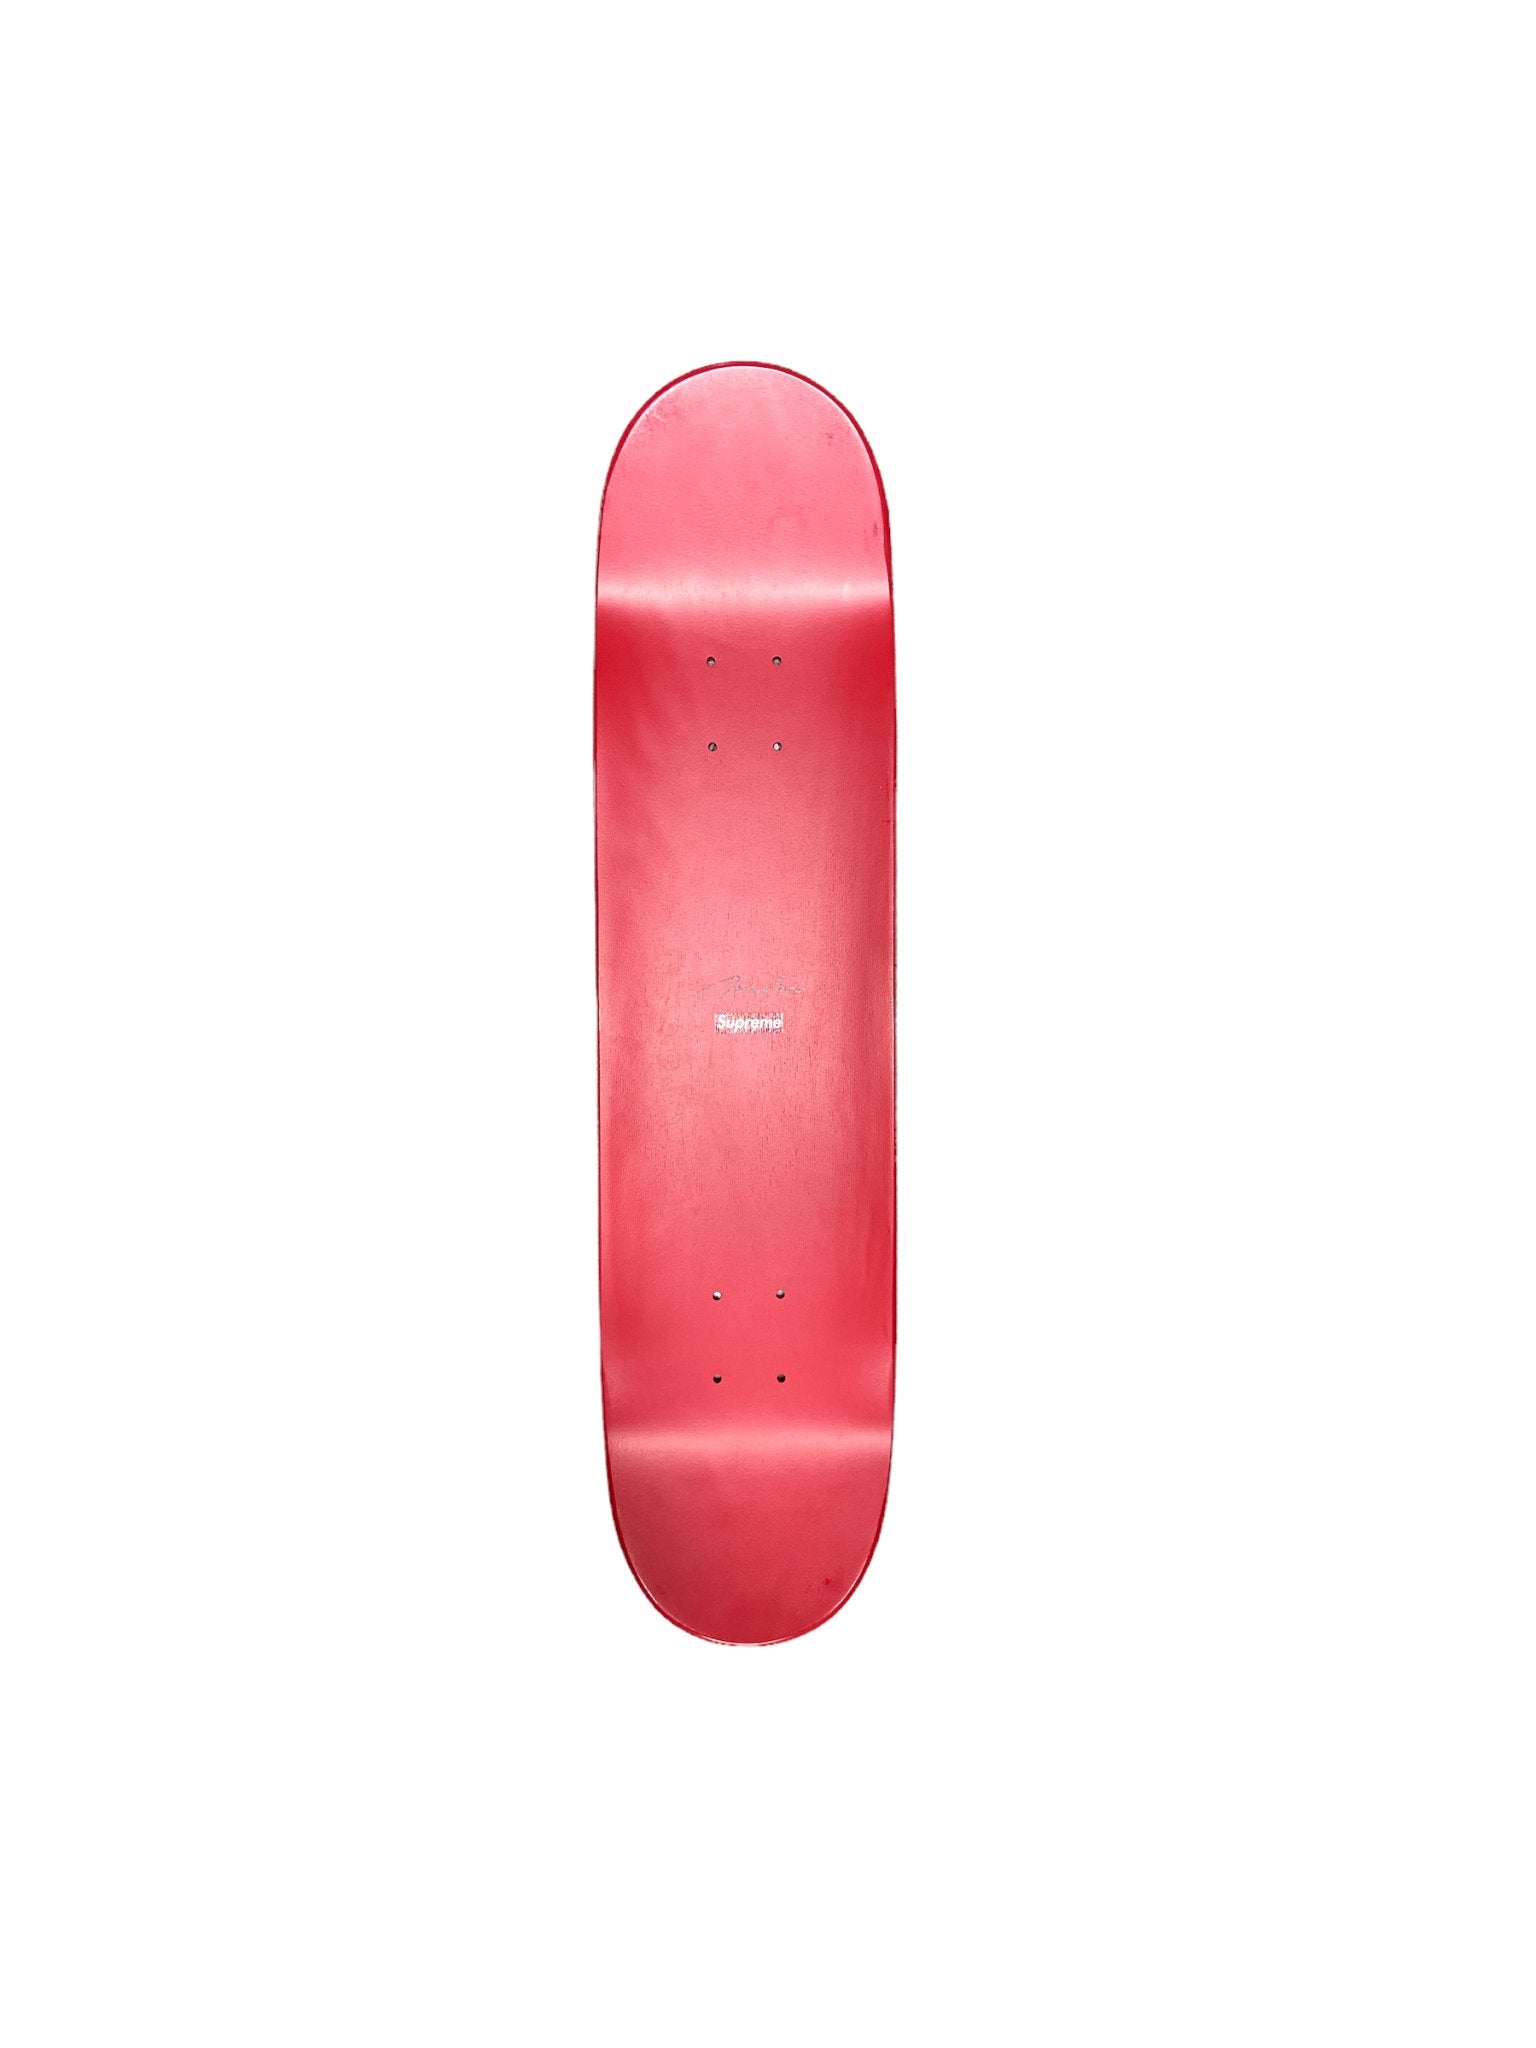 Takashi Murakami x Supreme Skateboard Deck Ponchi-Kun Red (Signed by Murakami) - Paroissesaintefoy Sneakers Sale Online